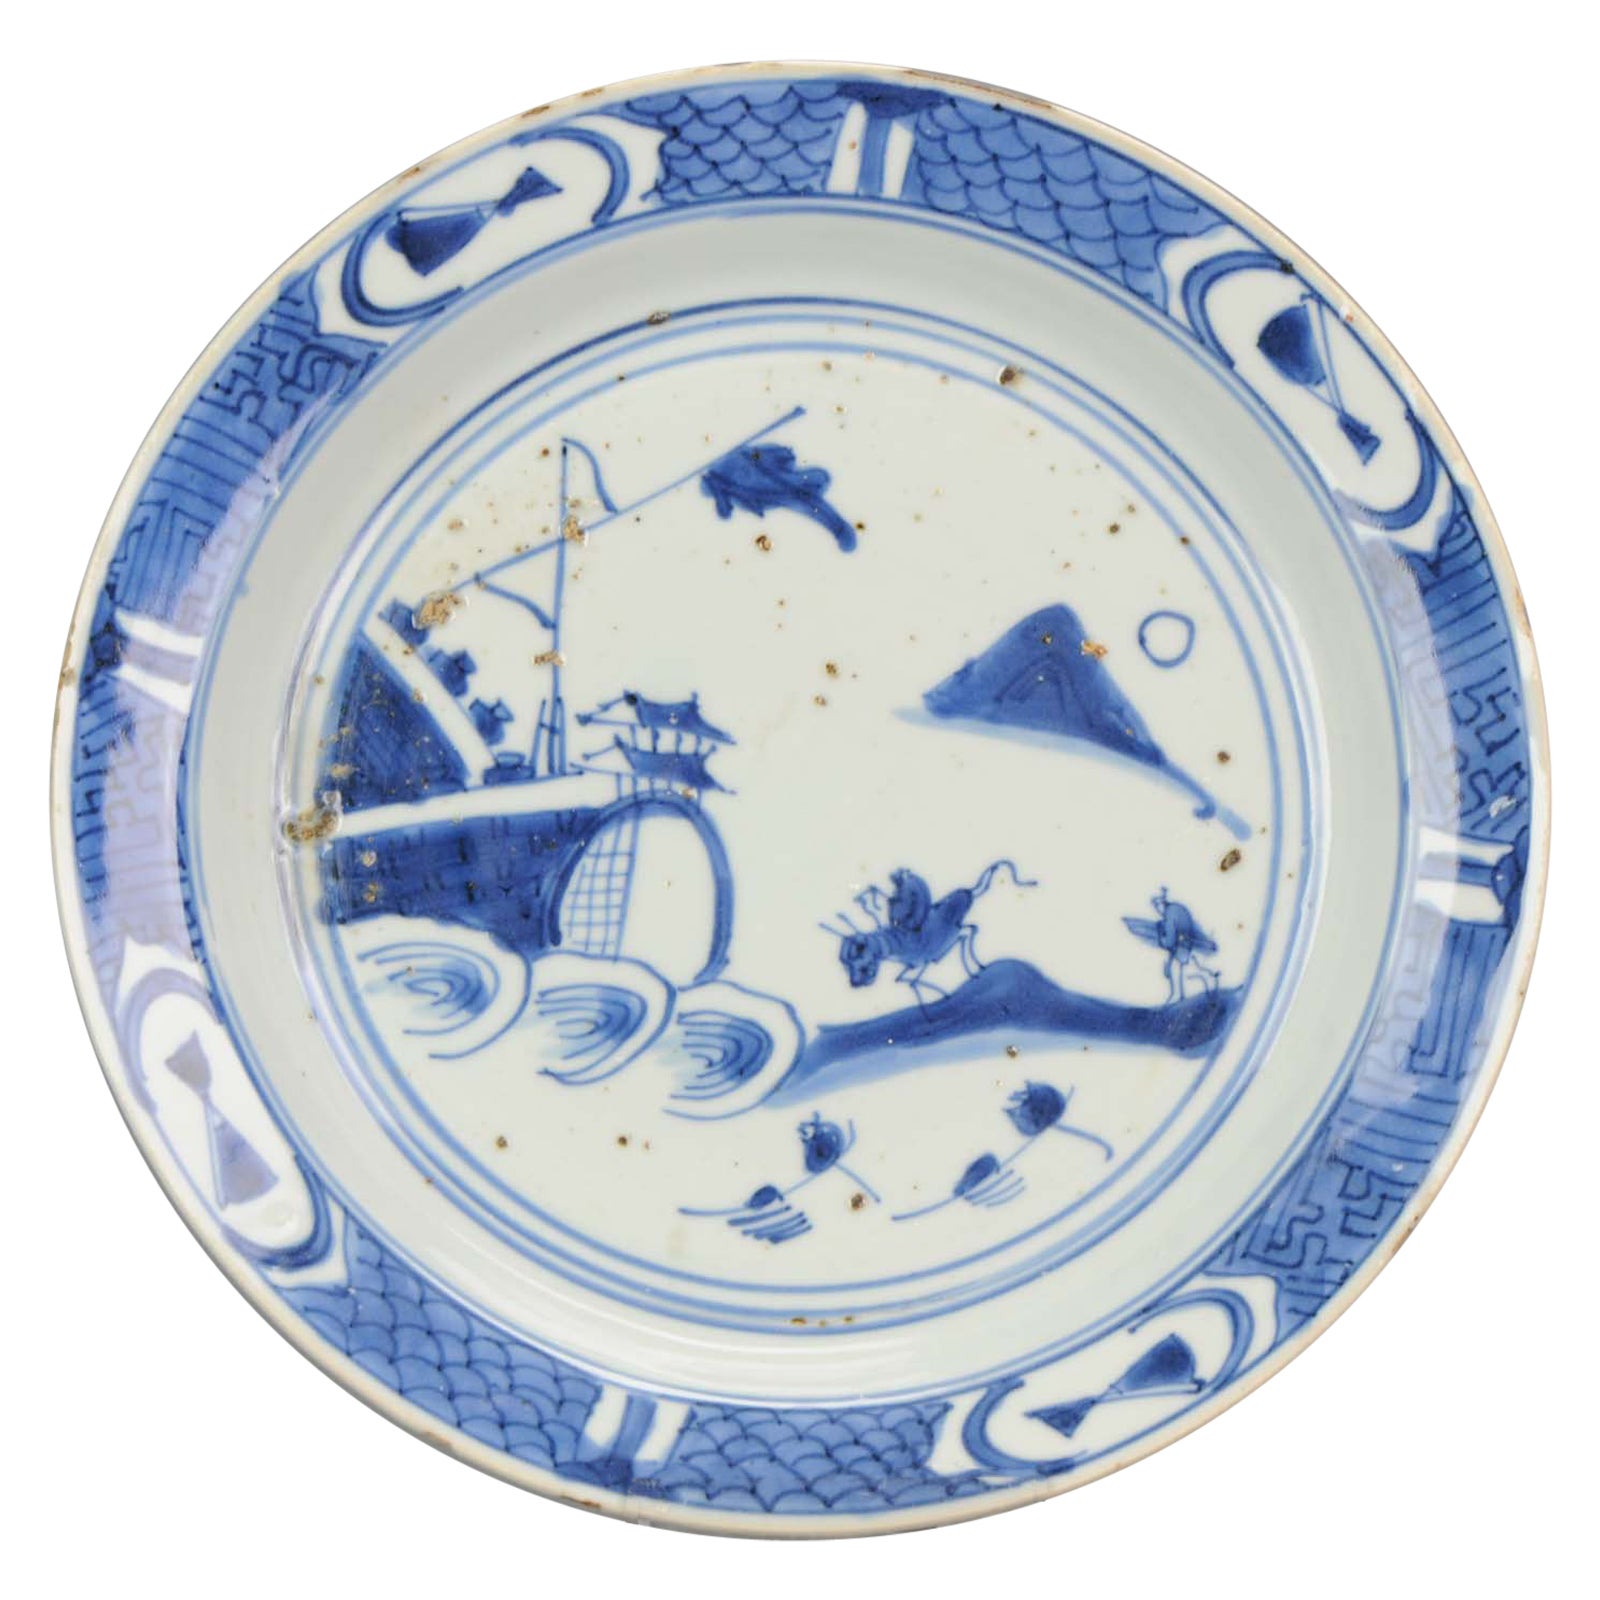 Antique Chinese Porcelain Kosometsuke Literati City Landscape Plate, 17th C